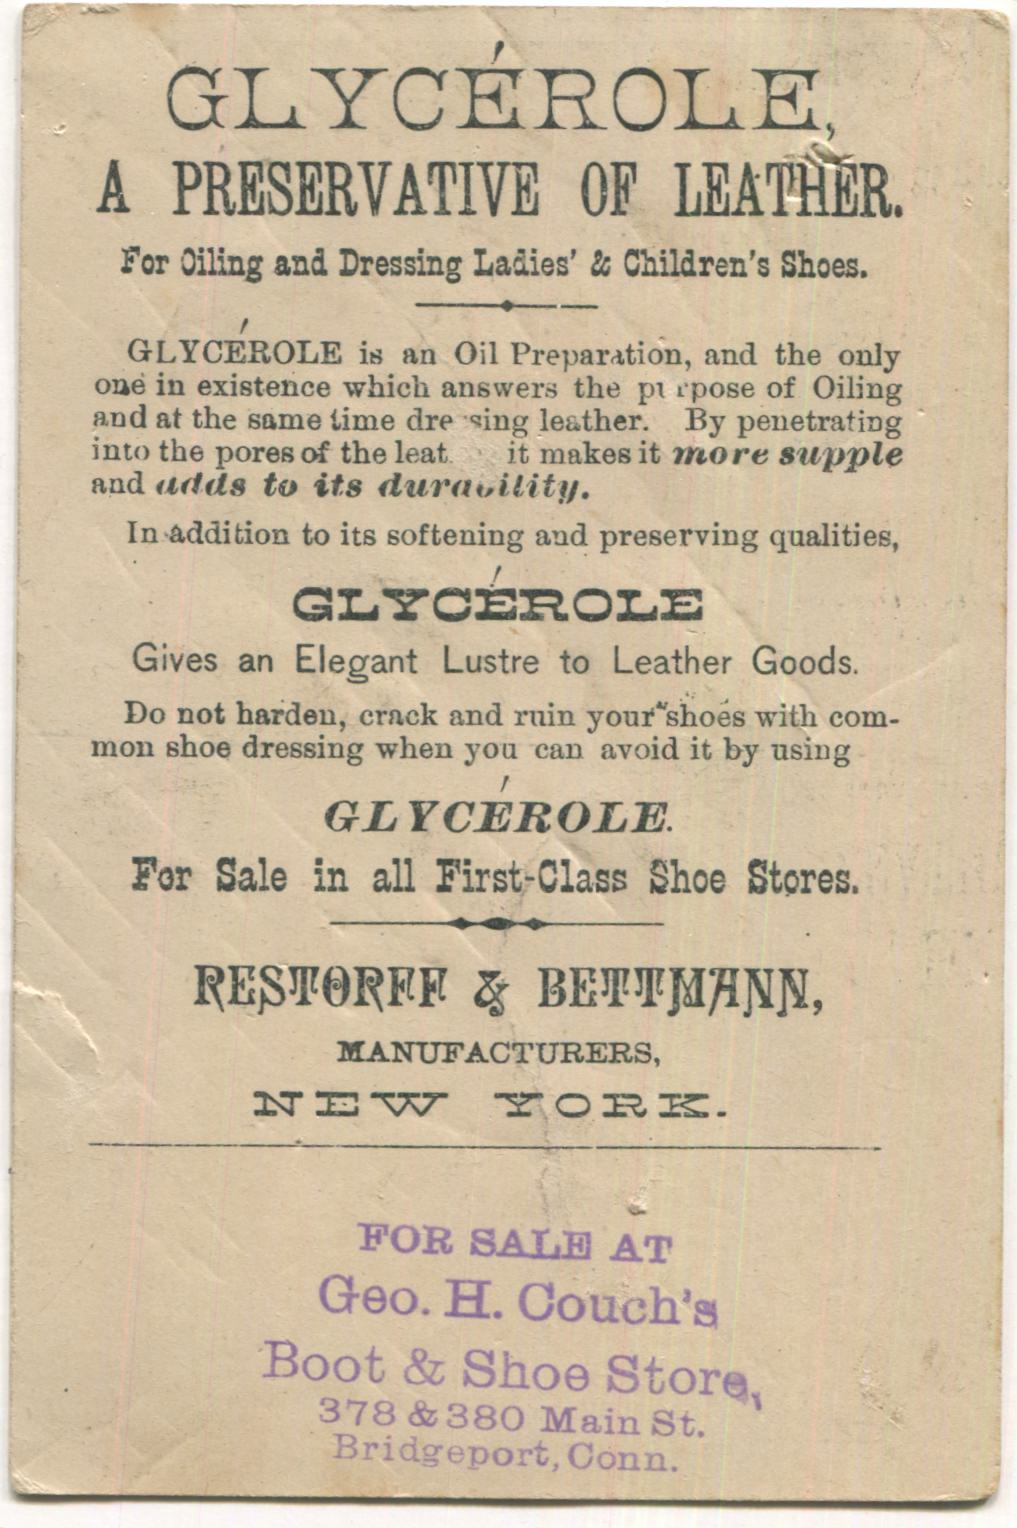 Glycerole Leather Preservative, Restorff & Bettmann, New York Antique Trade Card